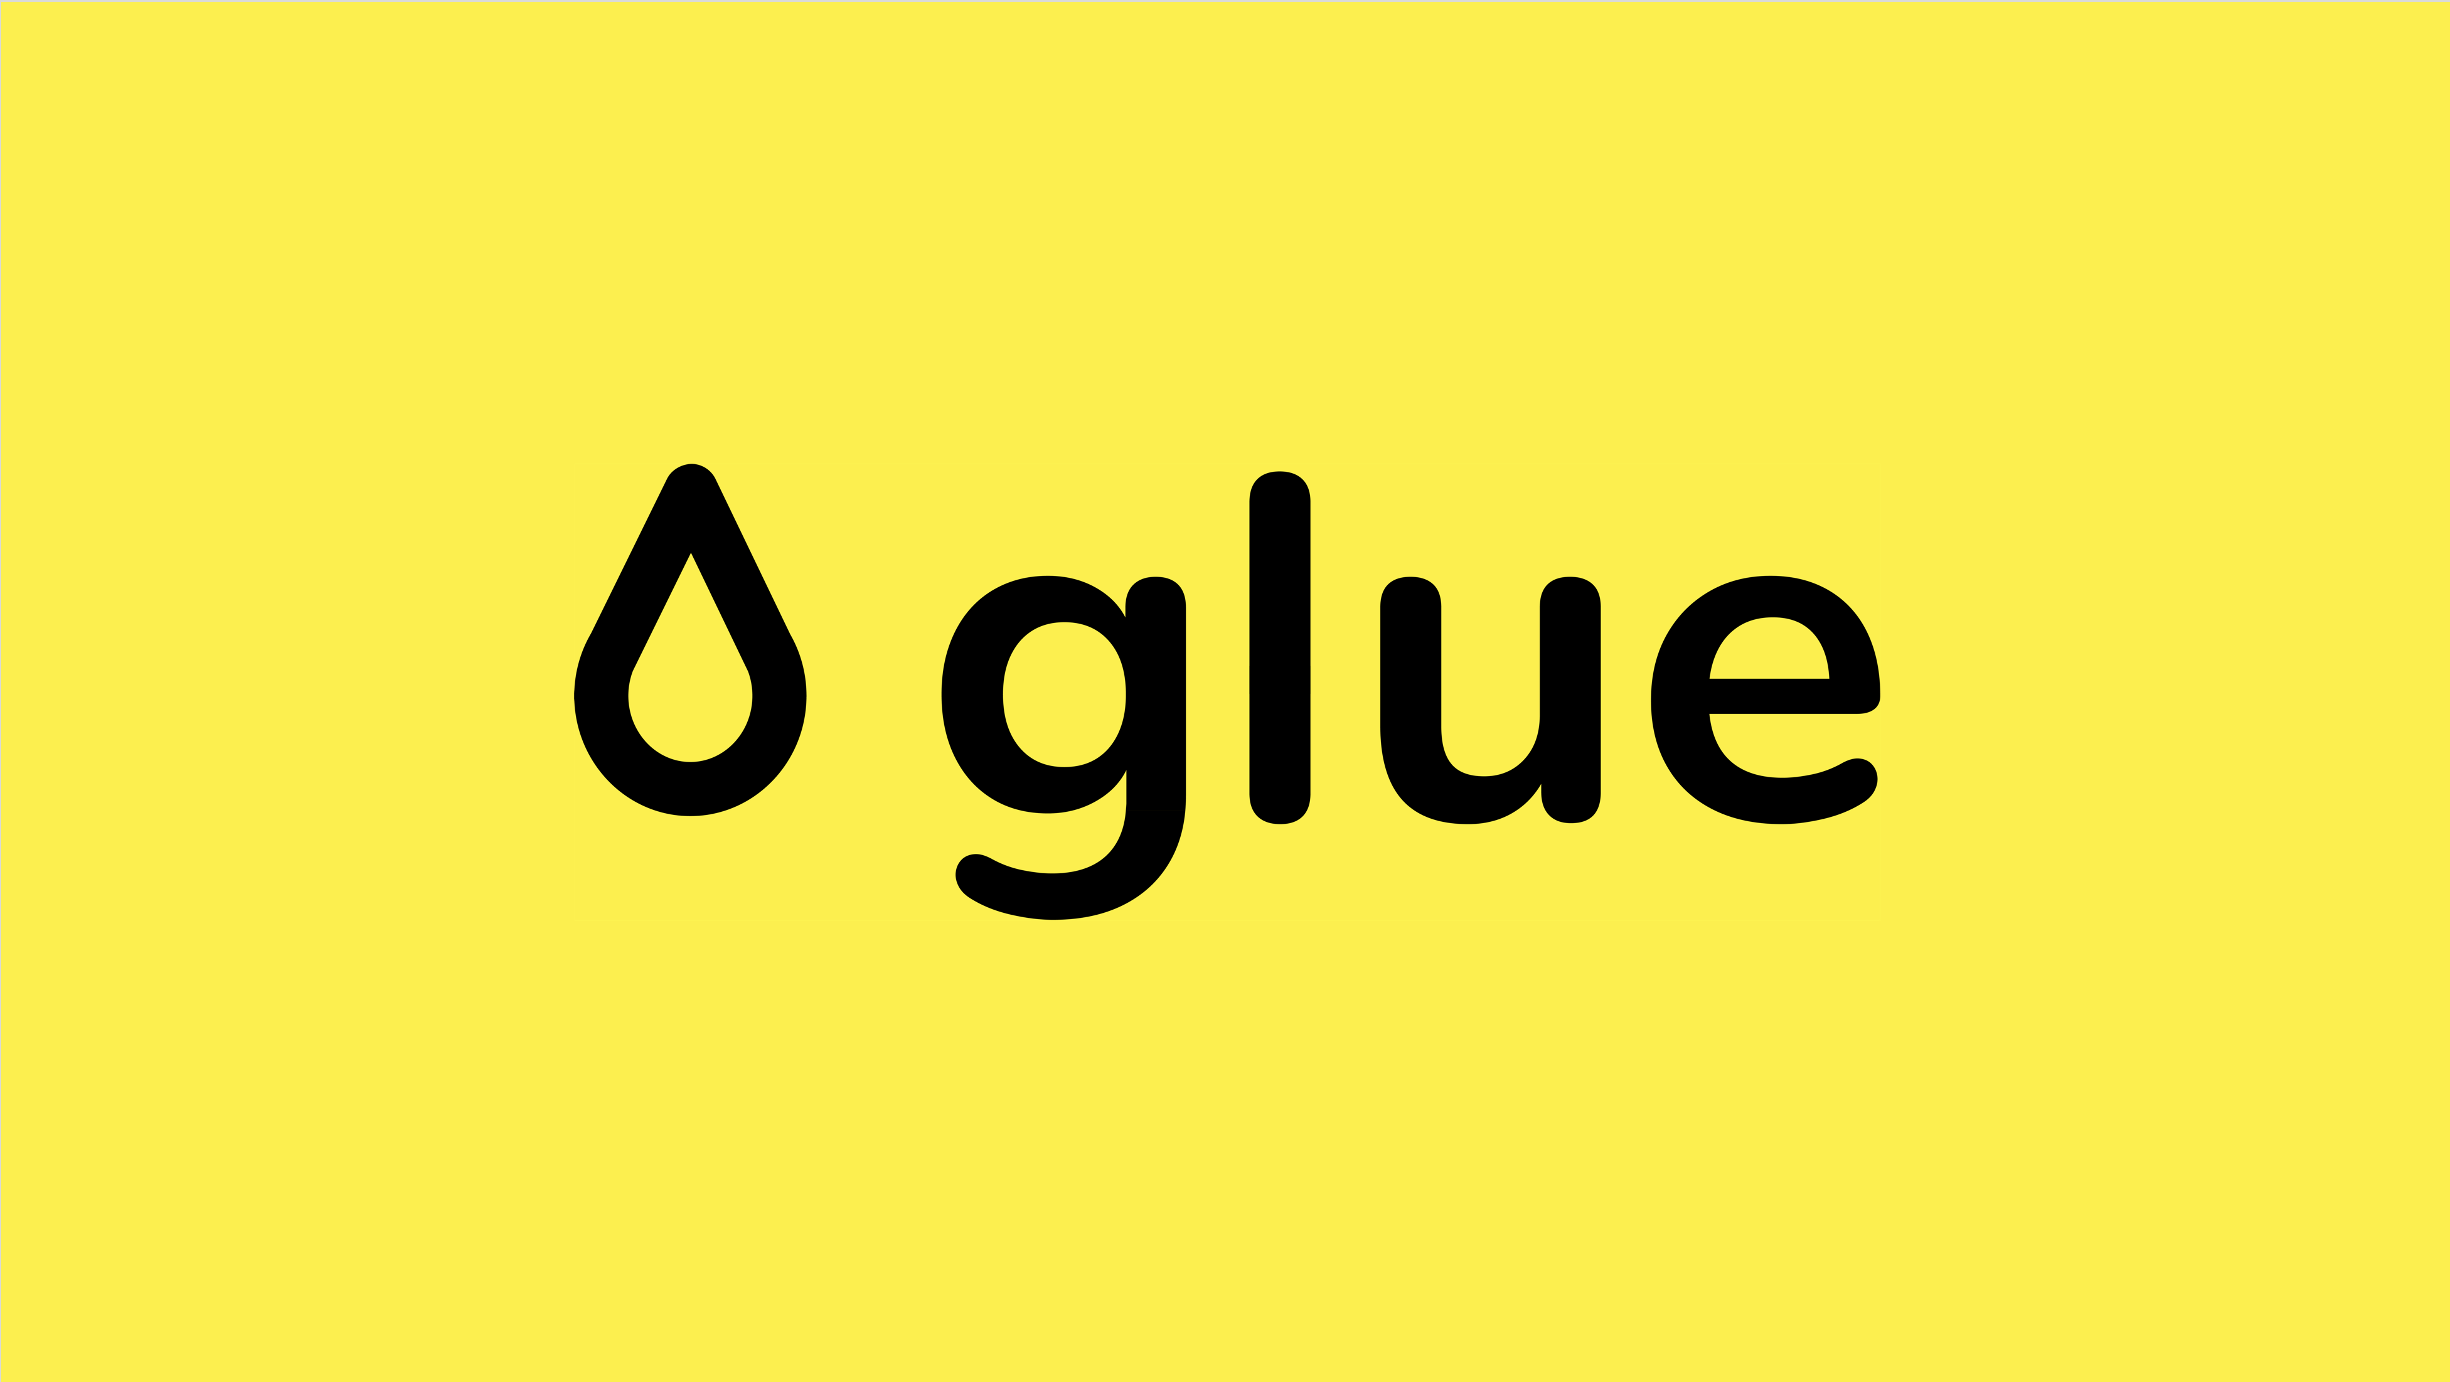 glue logo